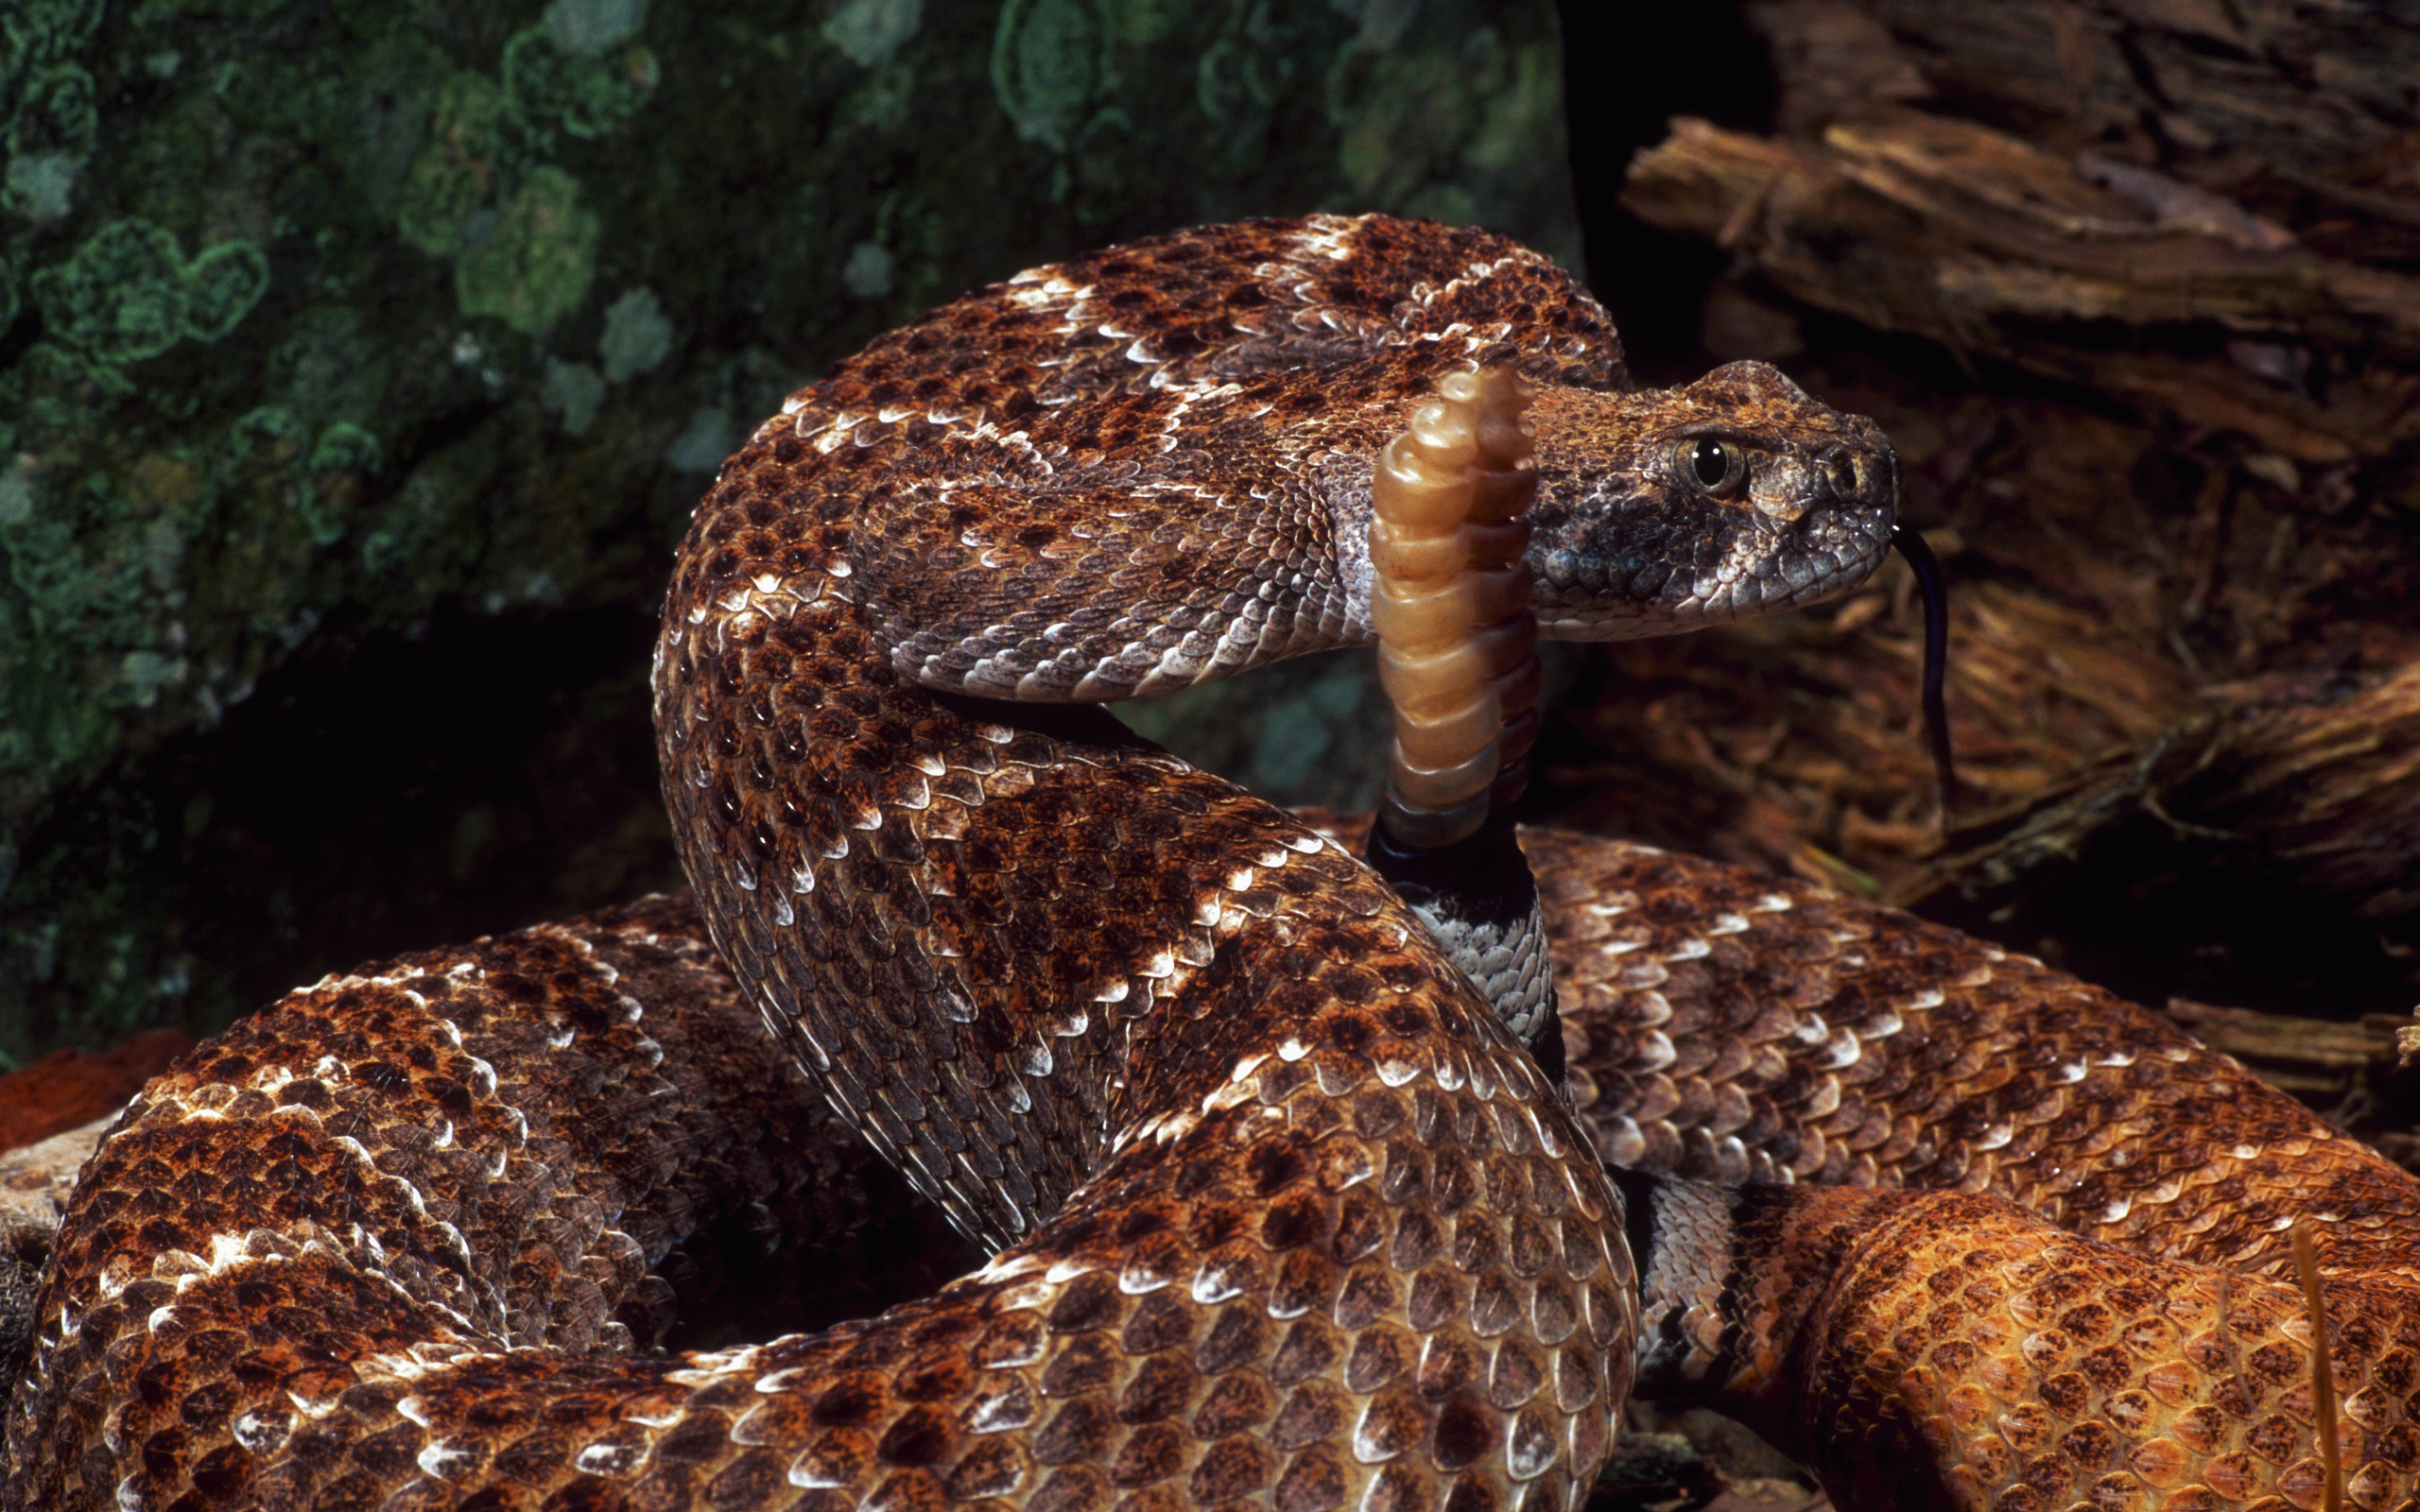 Rattlesnake wallpapers, Reptile art, Serpent-themed backgrounds, Nature-inspired designs, 2560x1600 HD Desktop